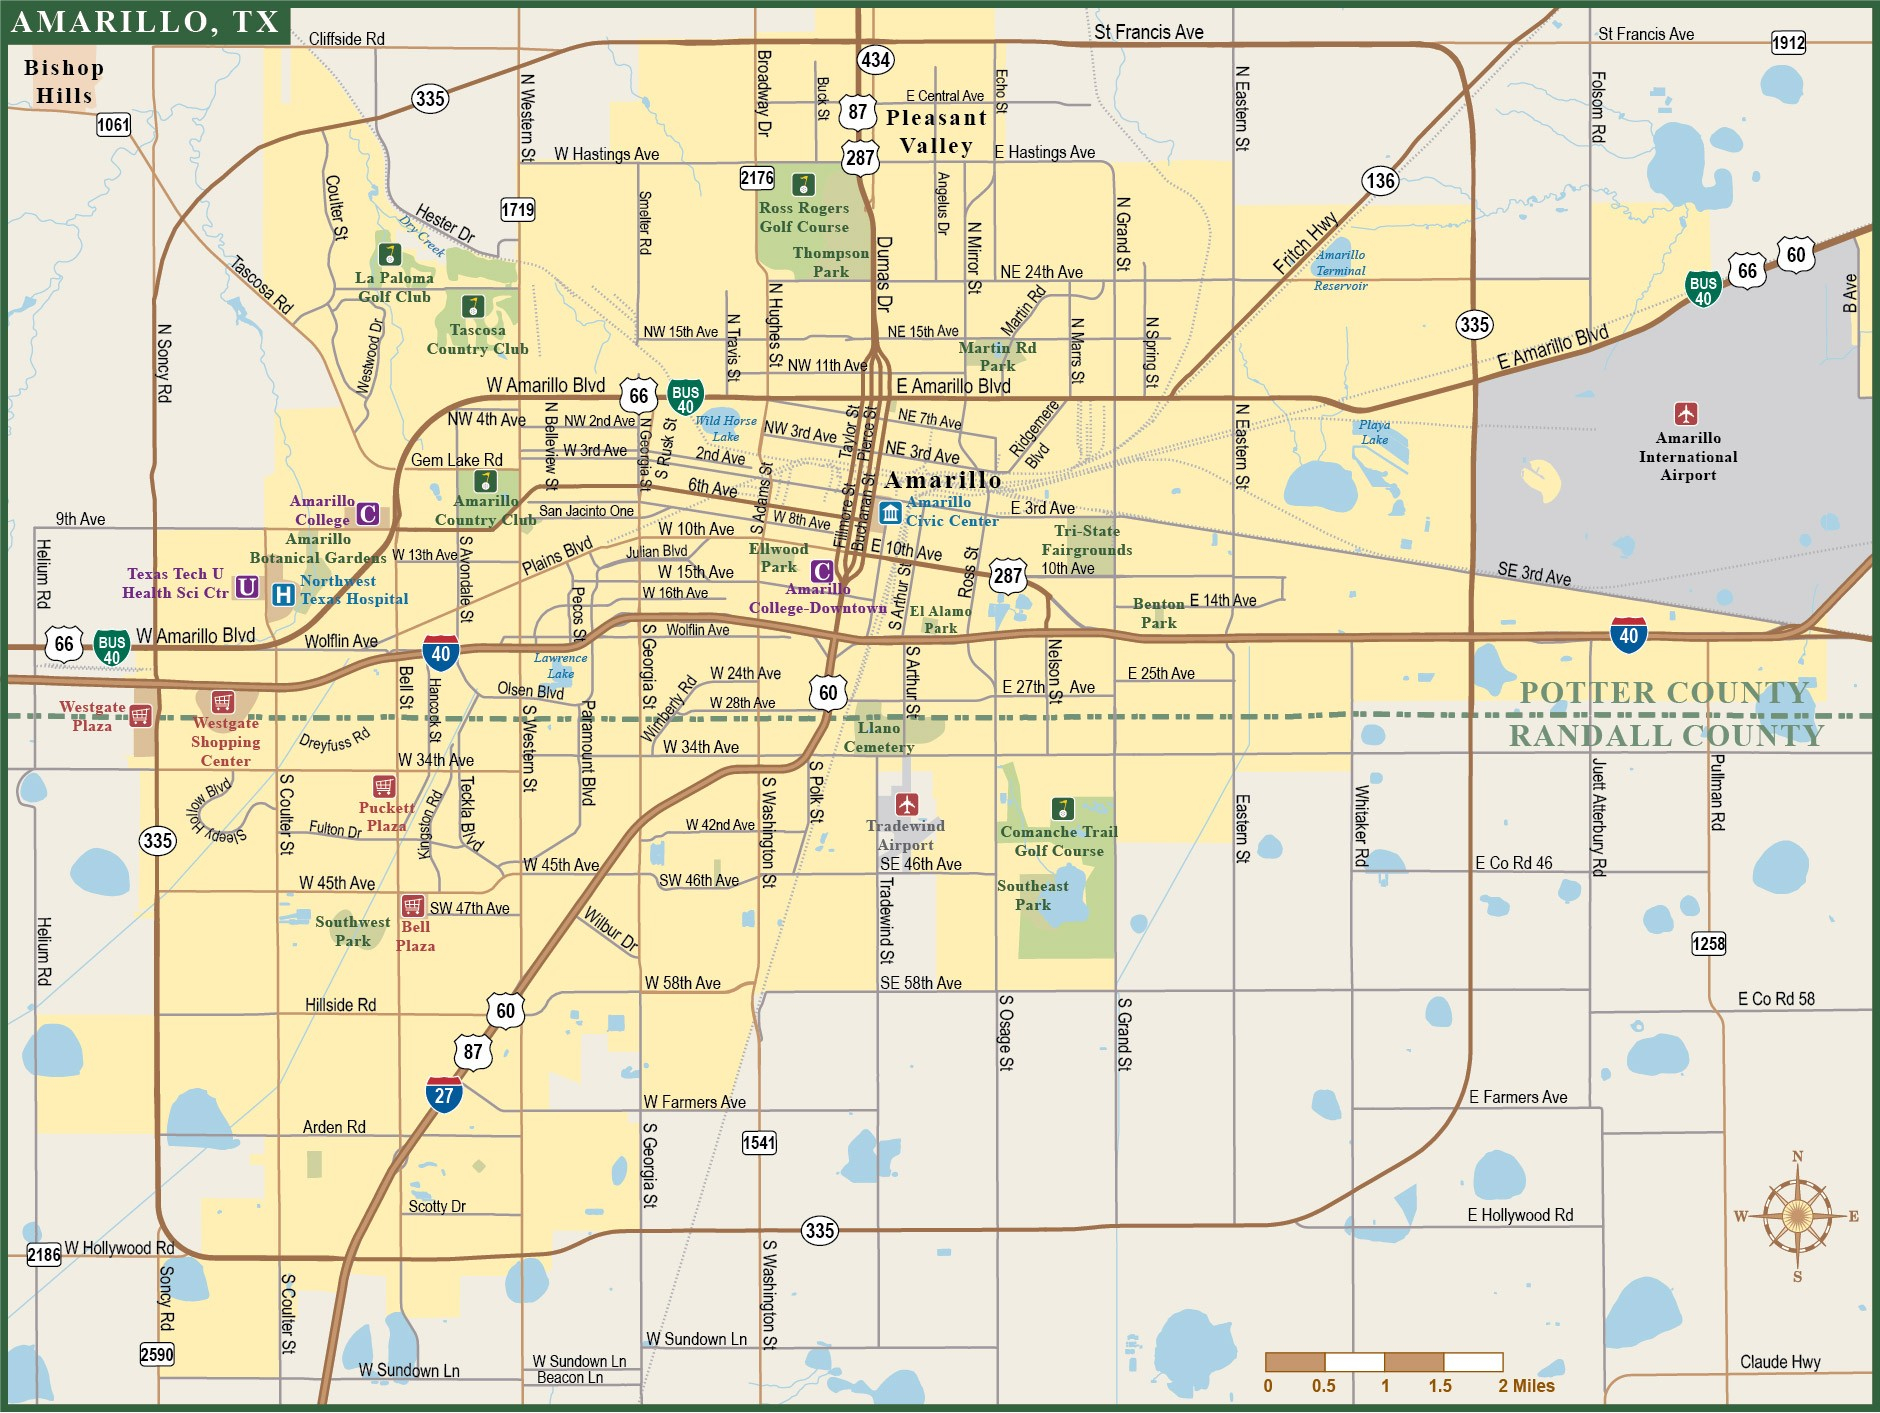 Amarillo Metro Map1 15 Amarillo Texas Map | Ageorgio - Where Is Amarillo On The Texas Map